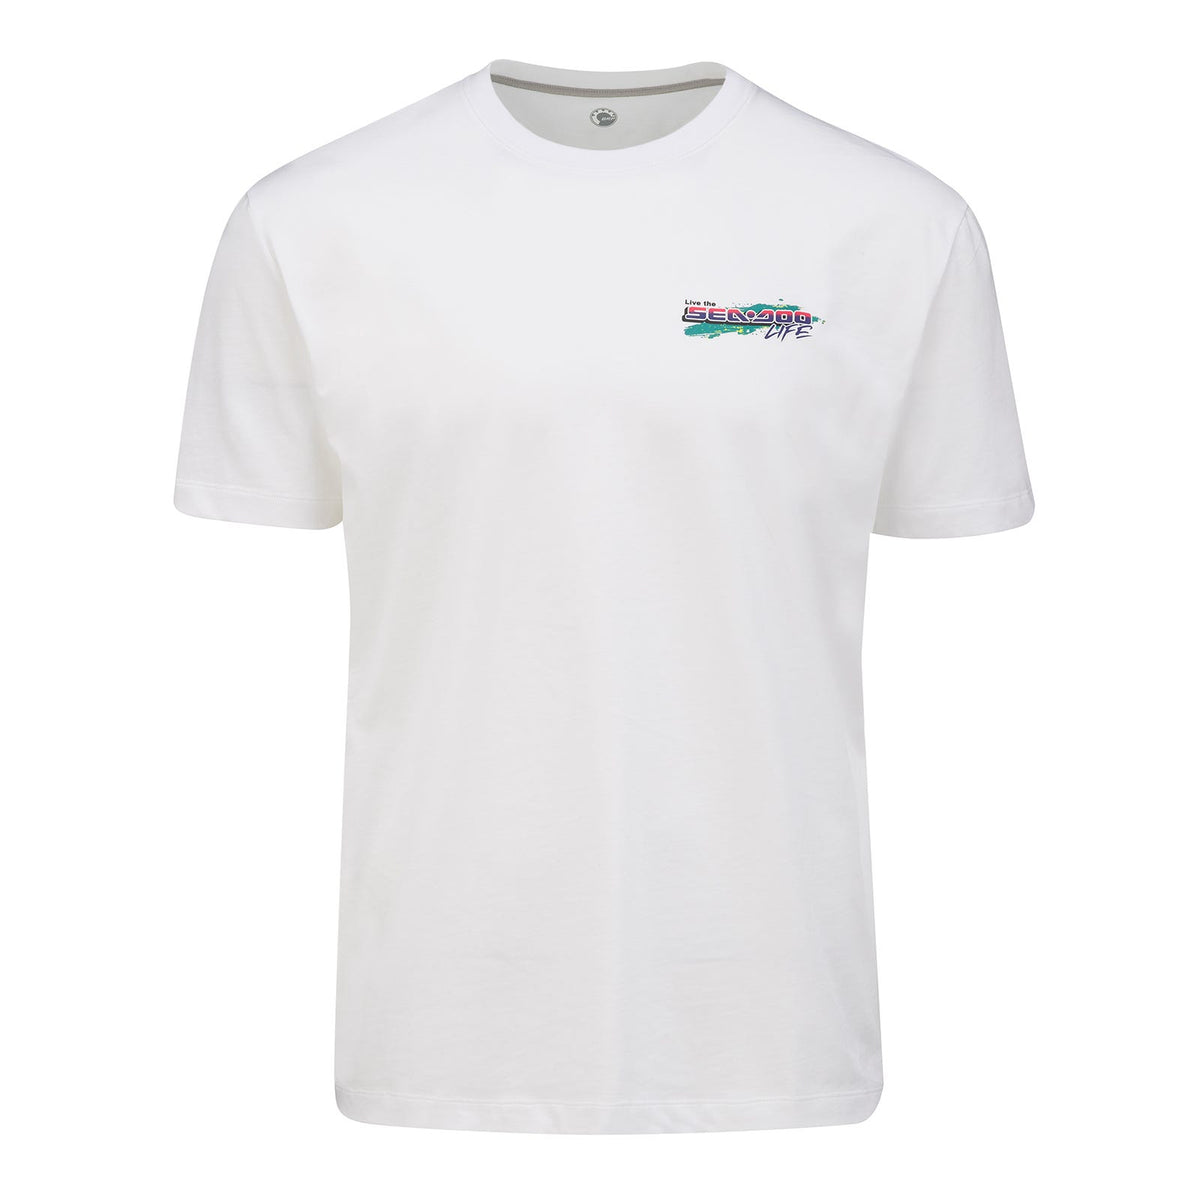 Sea-Dooo Retro T-Shirt